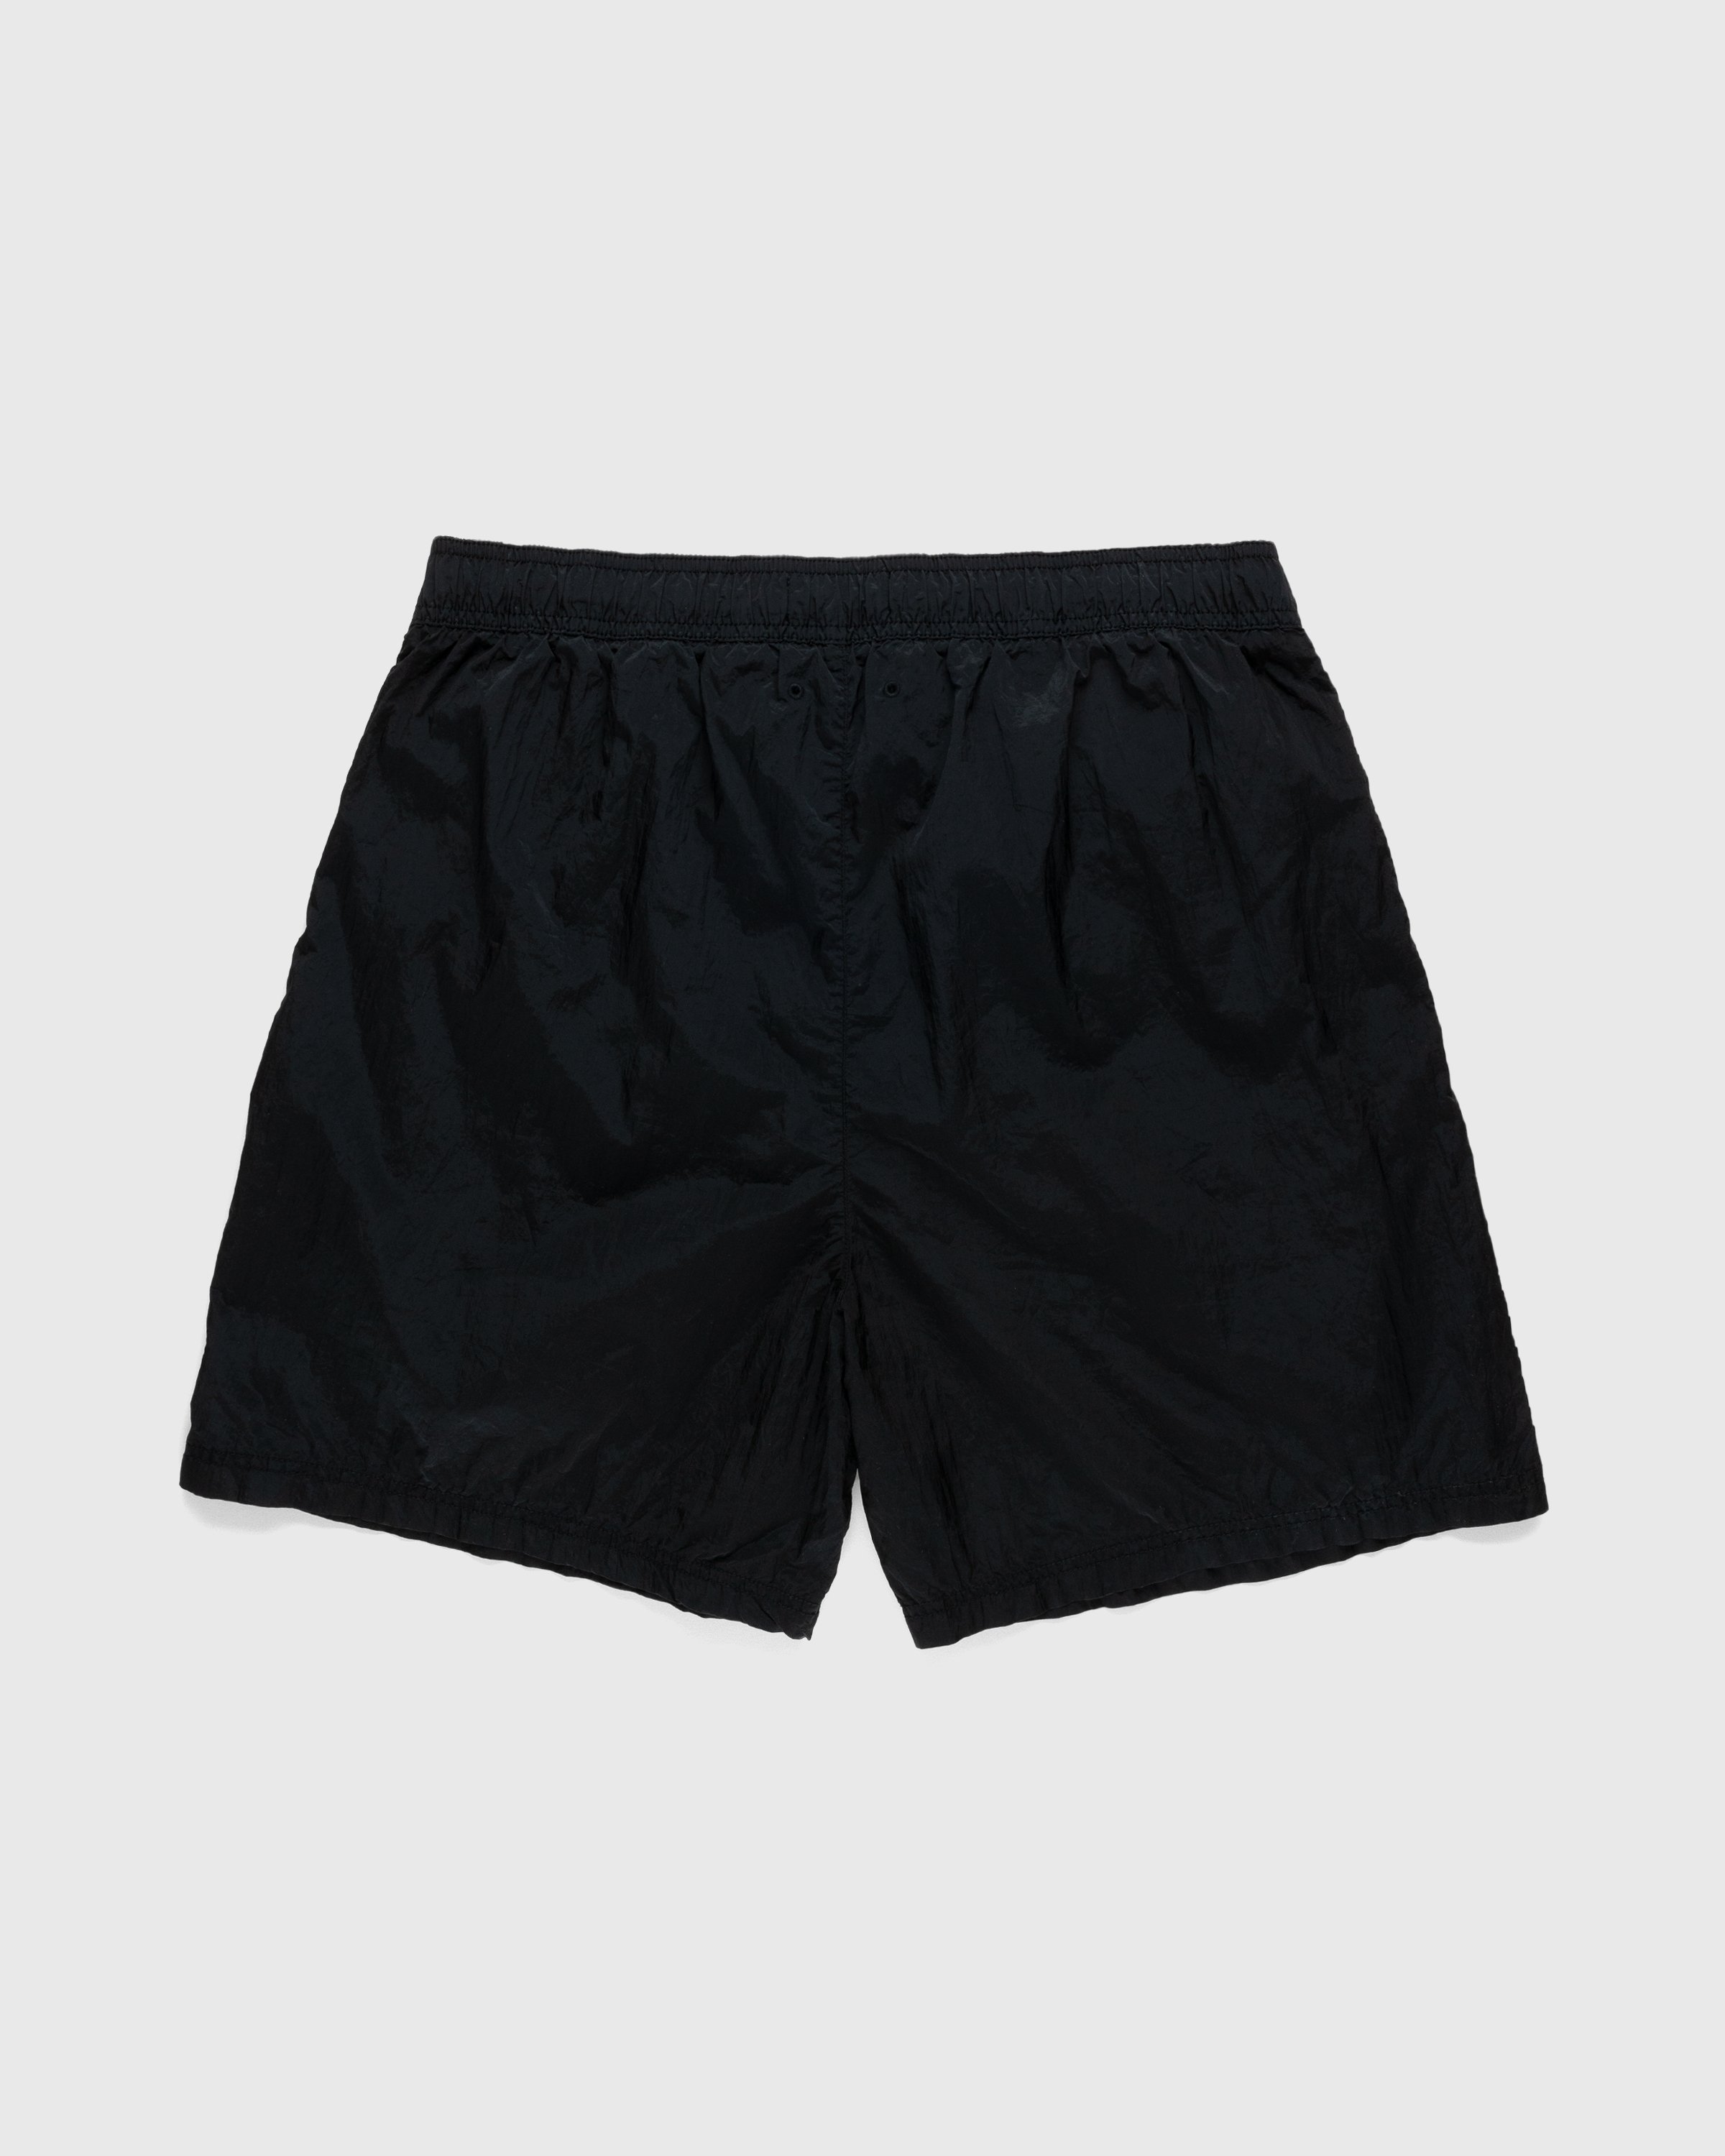 Stone Island - B0243 Nylon Metal Swim Shorts Black - Clothing - Black - Image 2